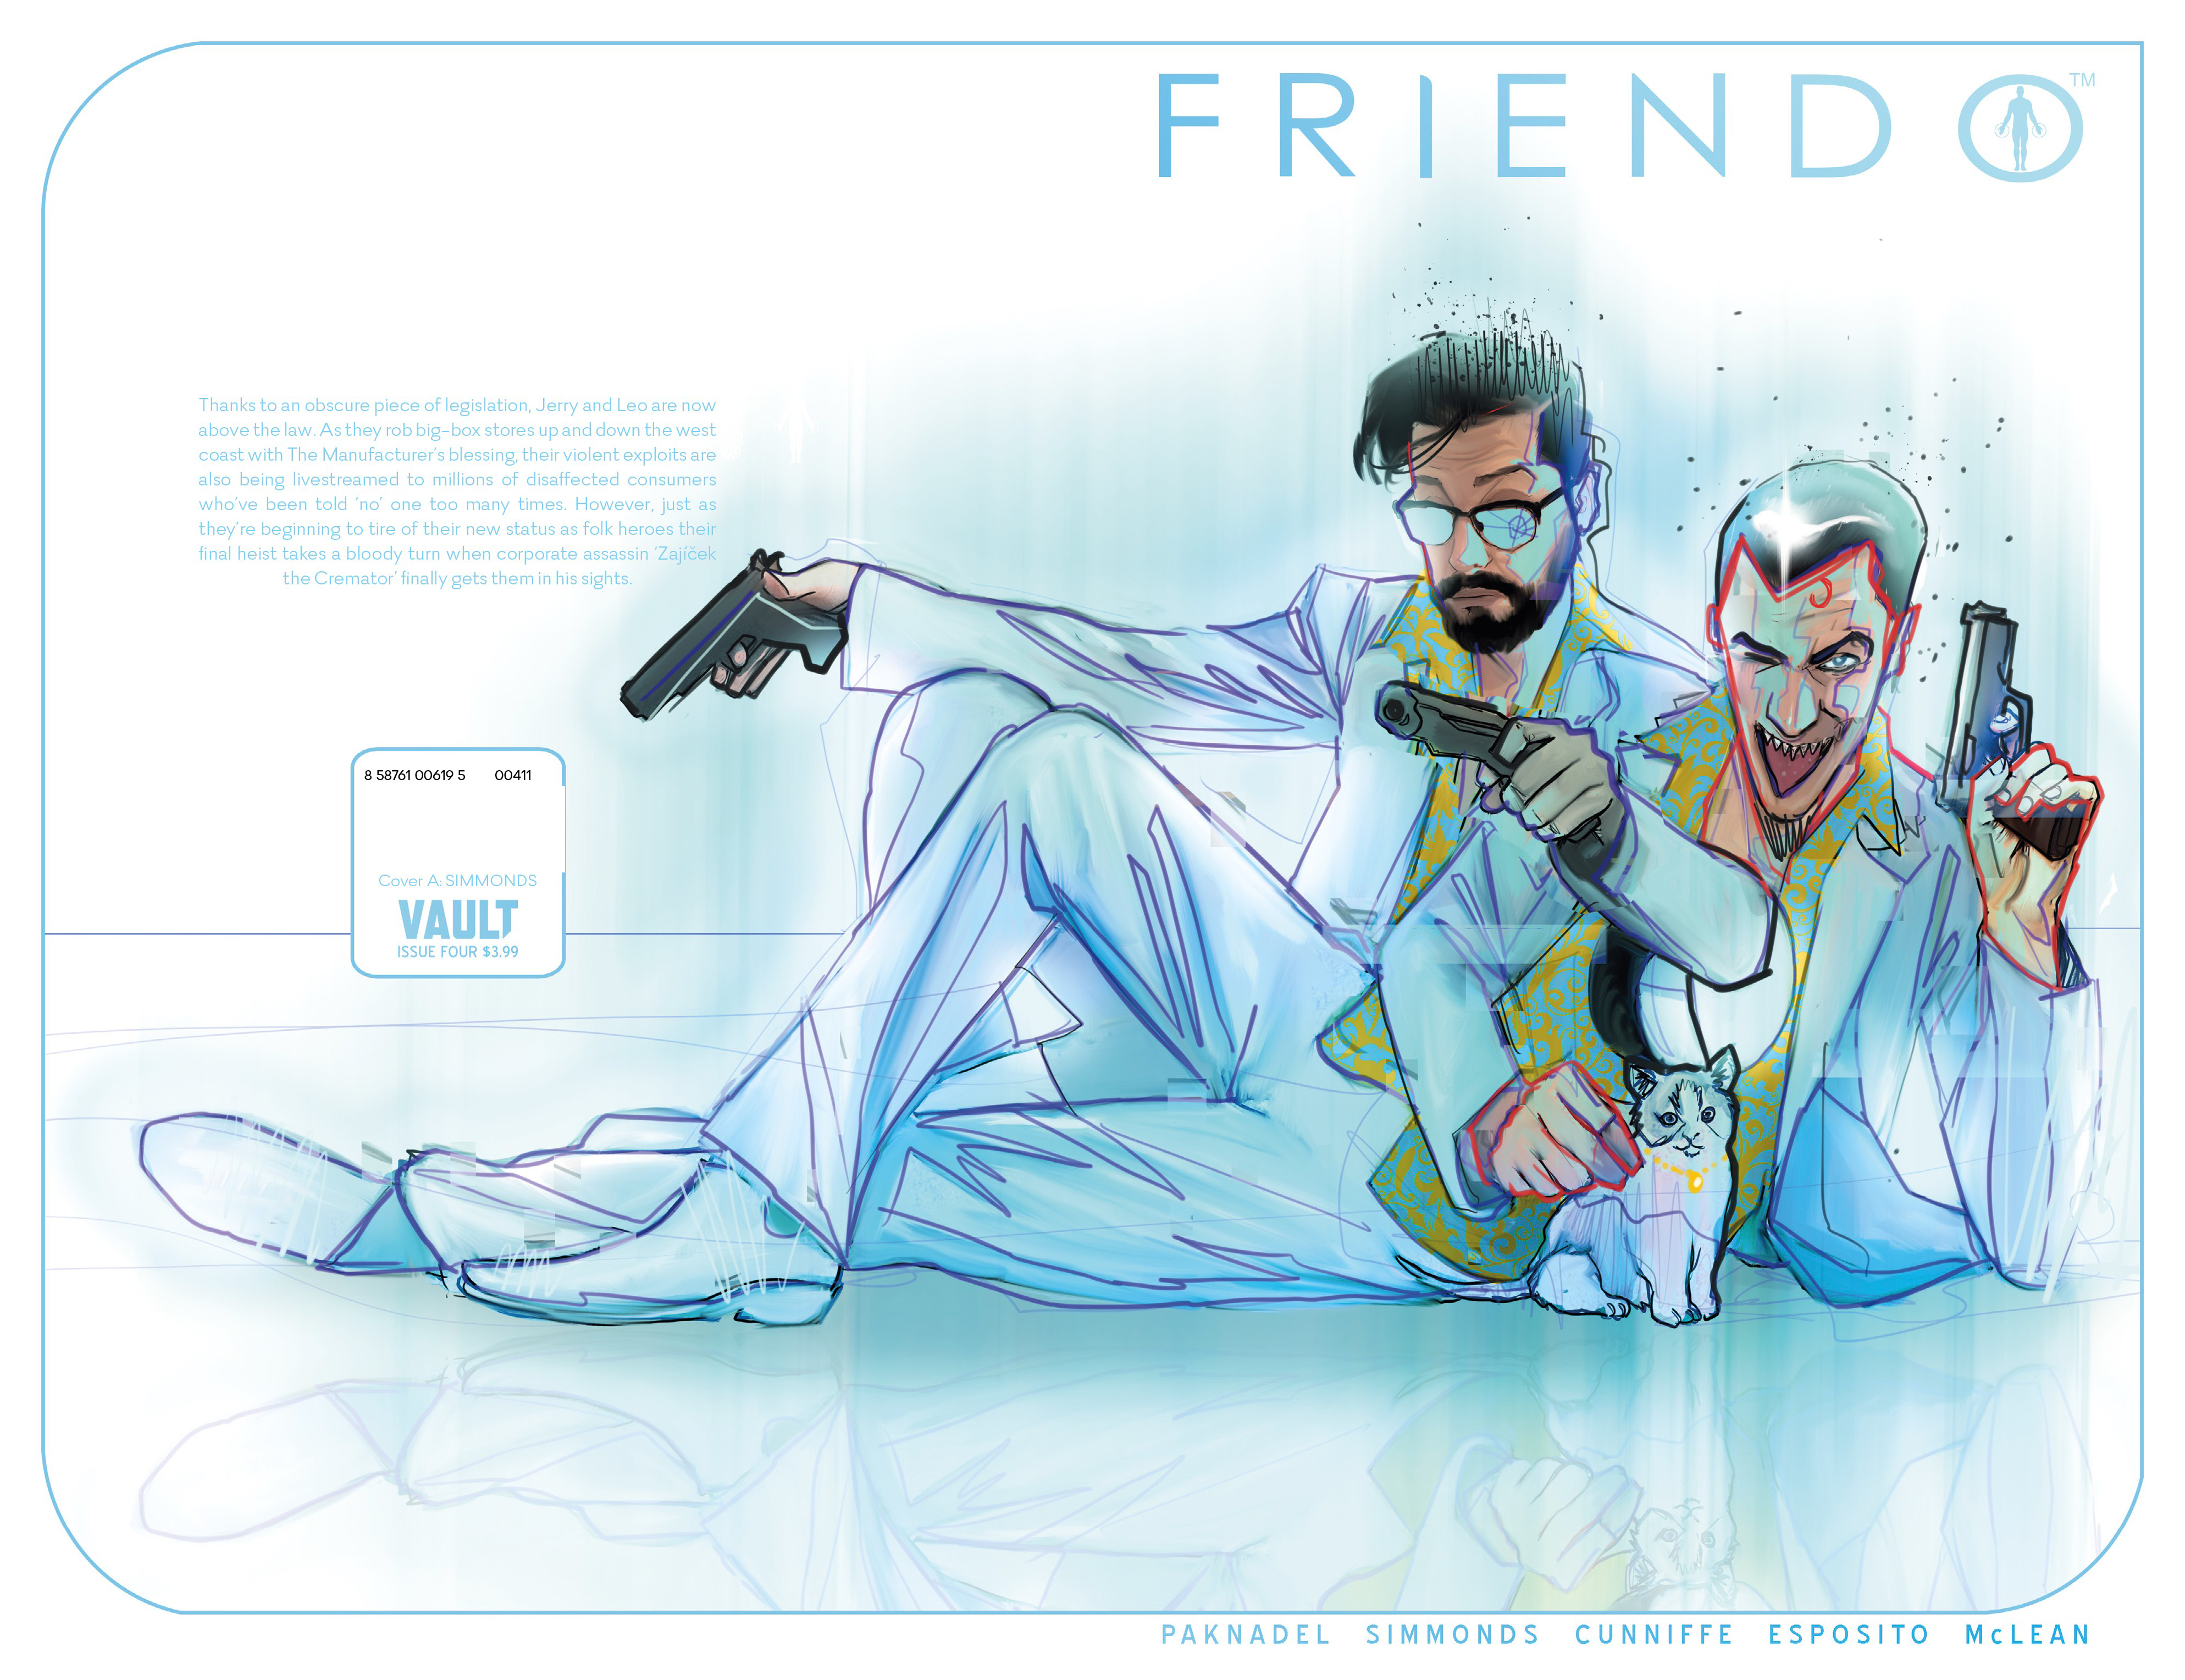 Read online Friendo comic -  Issue #4 - 1